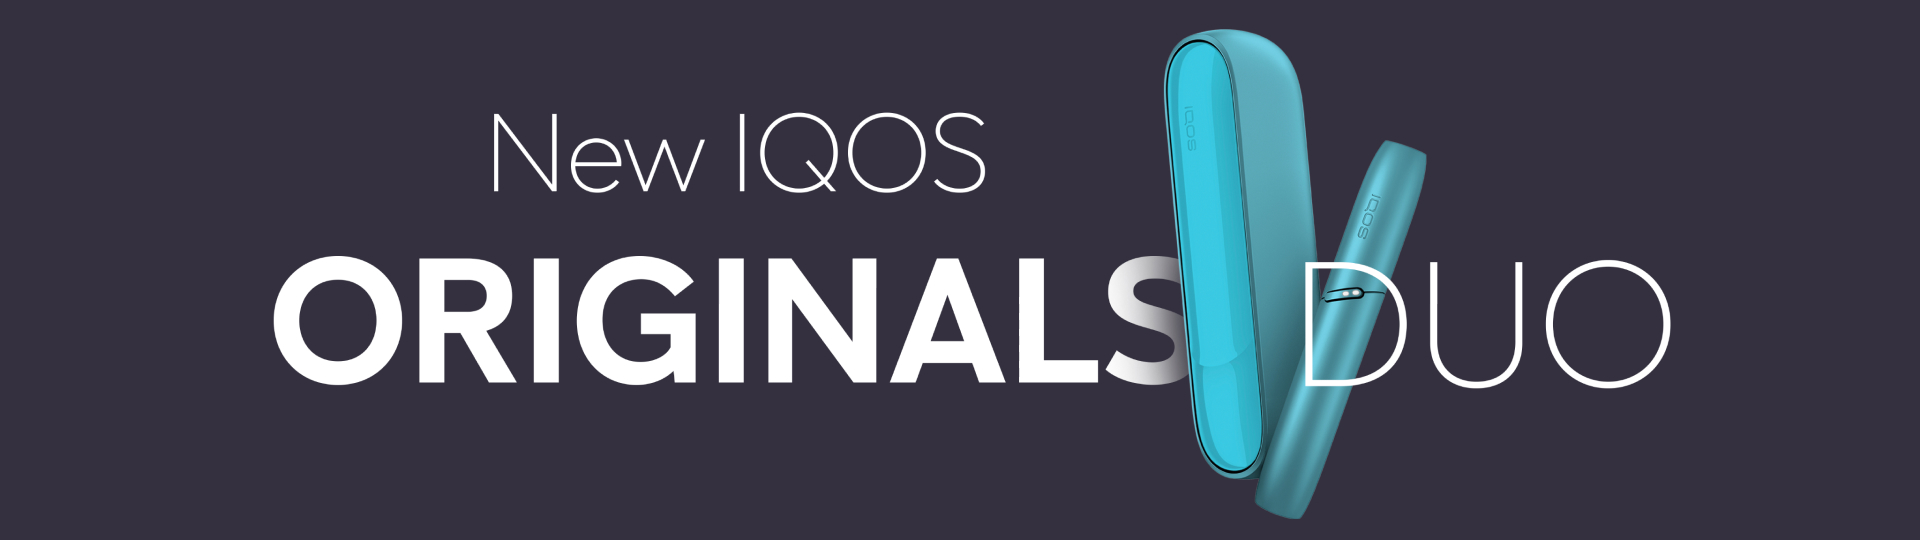 IQOS Device - Originals Duo Kit - Wicked Imports (Pty) Ltd